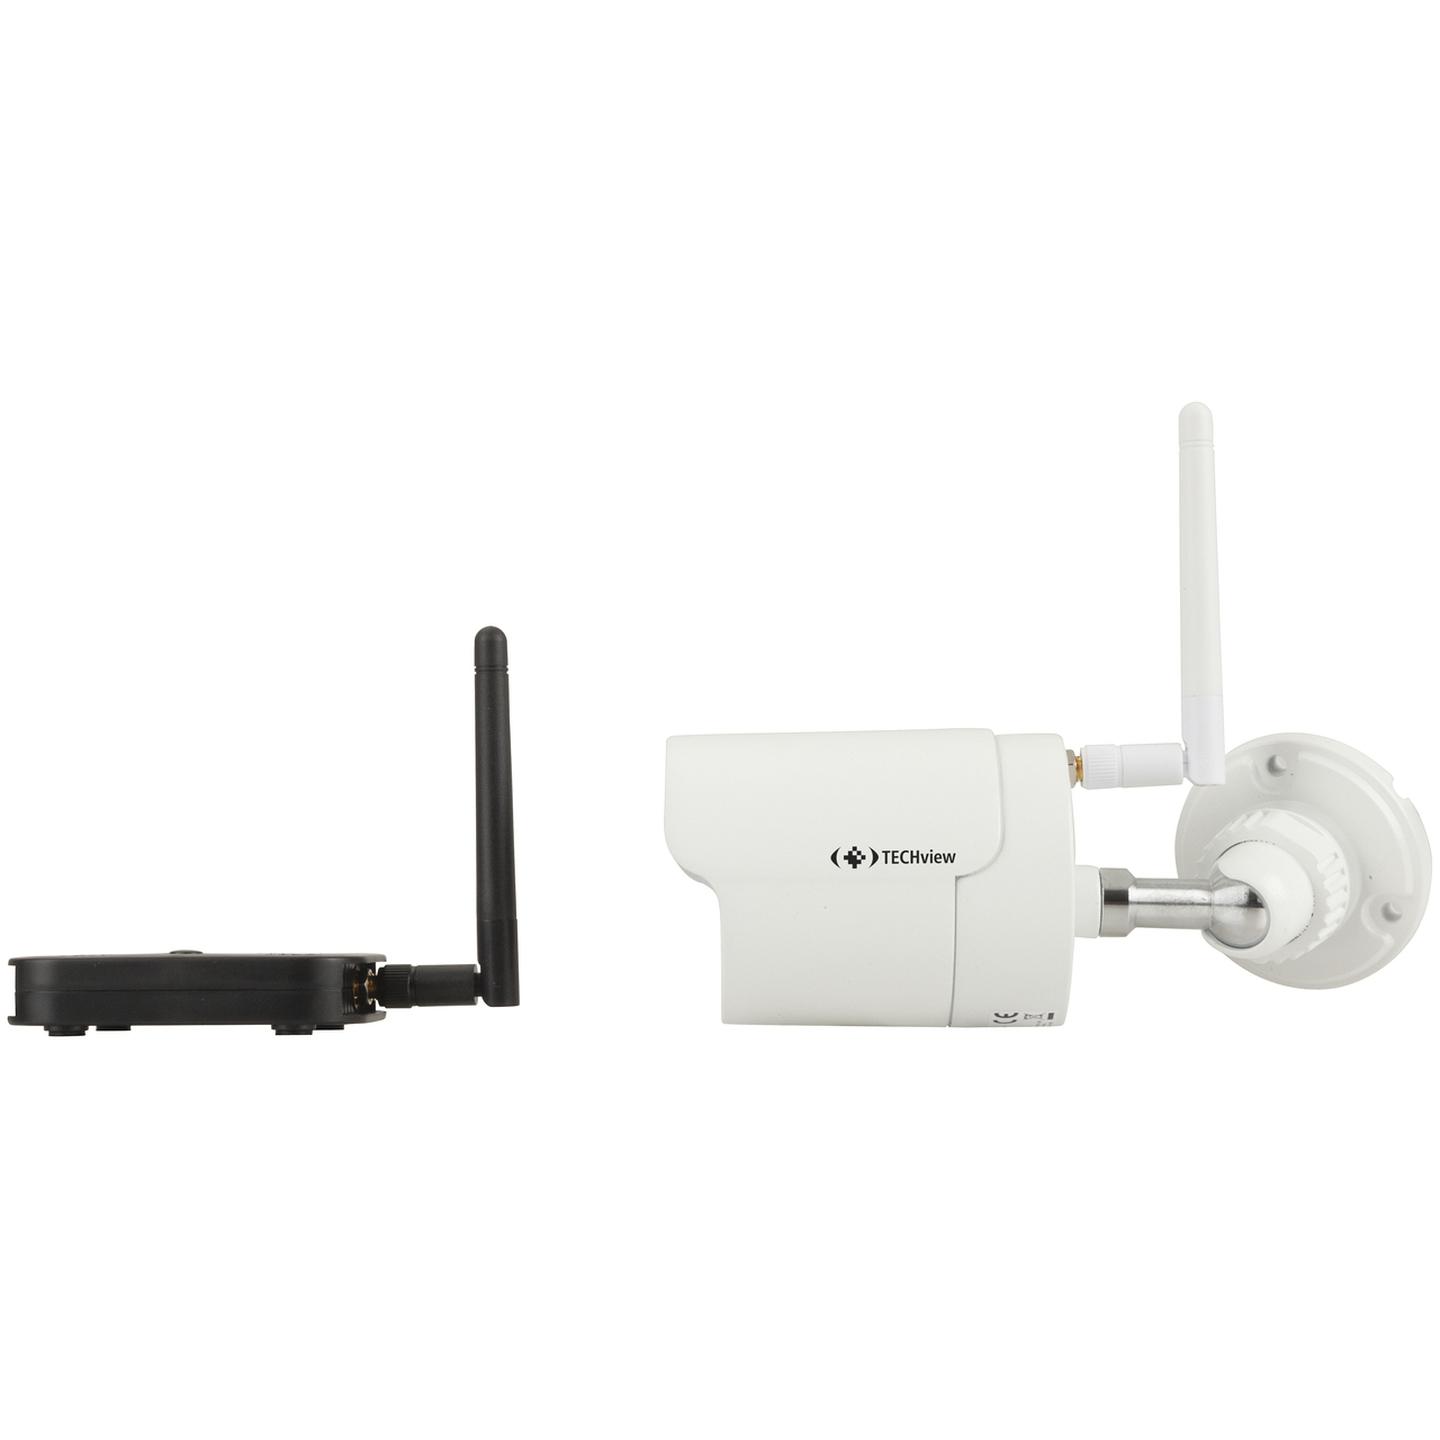 720p AHD Wireless Receiver & Camera Kit